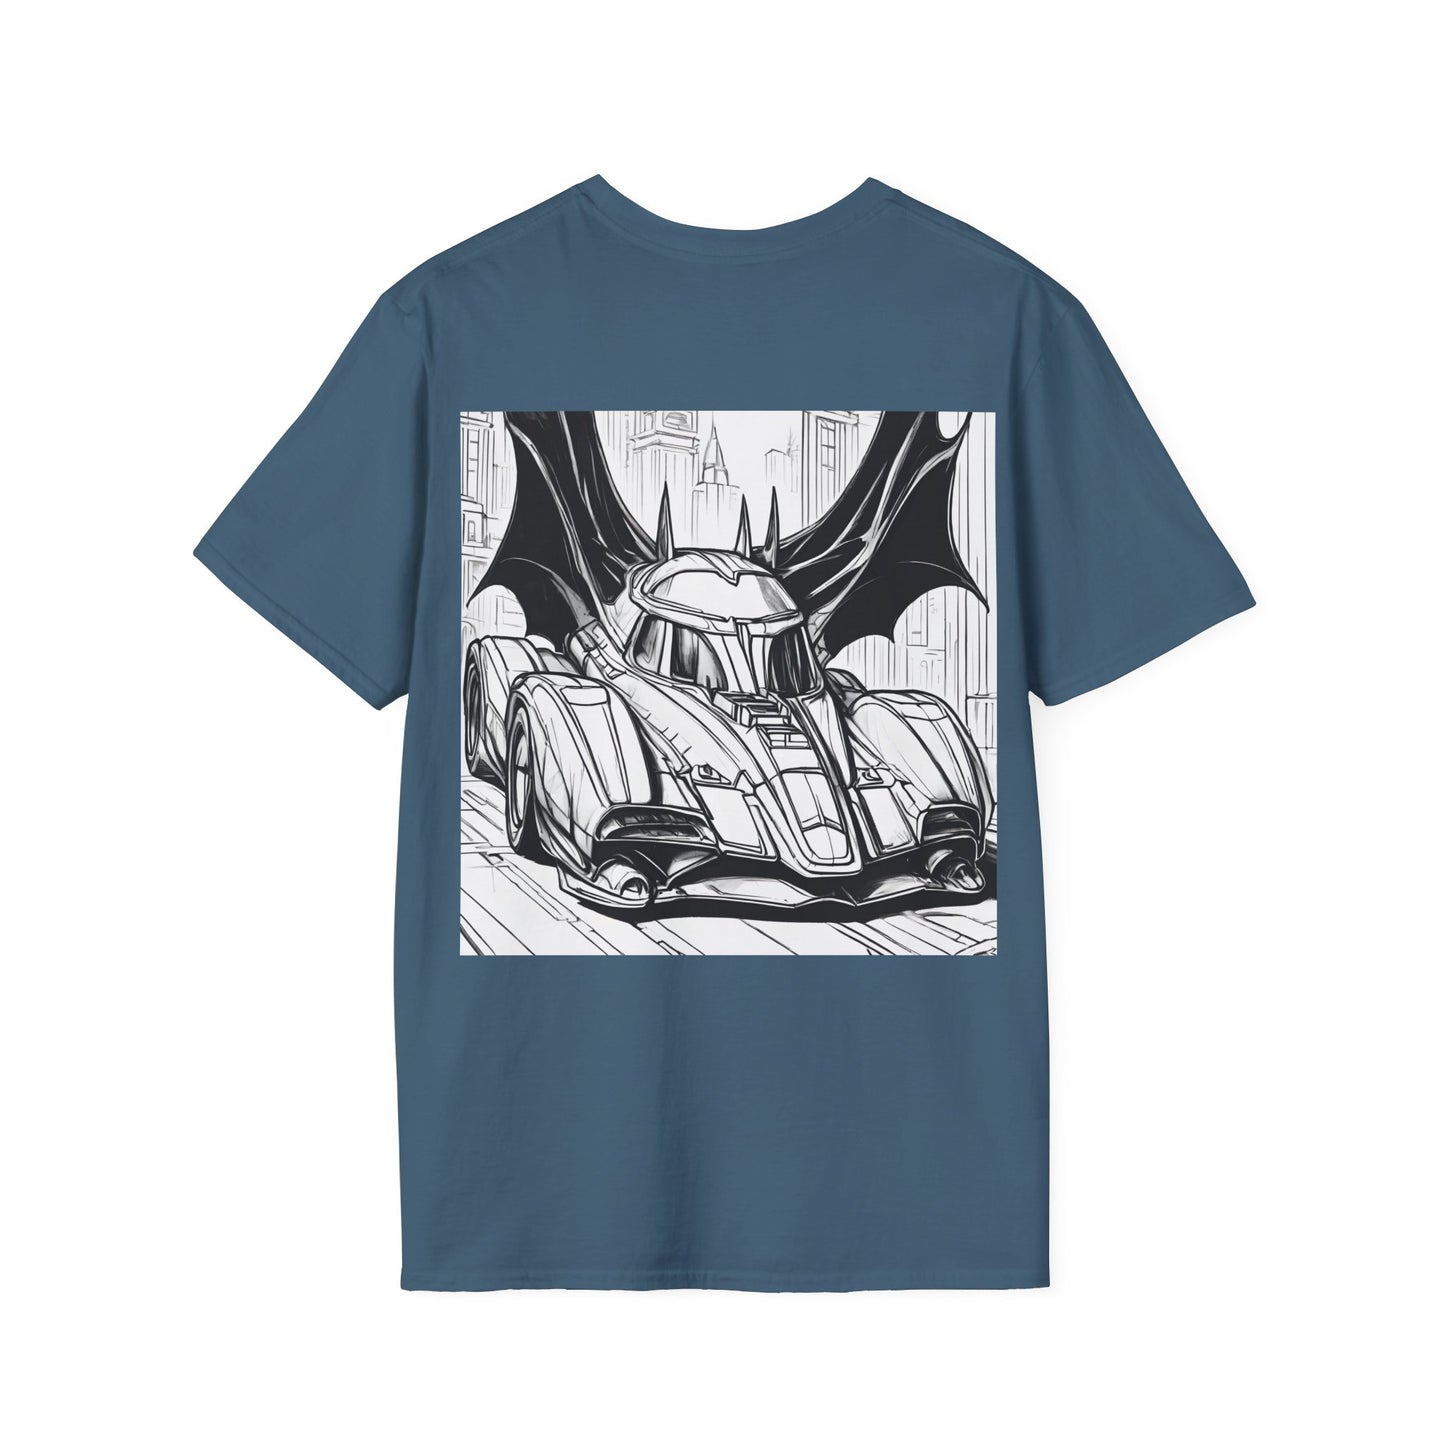 "Automobiliá de Chiroptera" Double Print Unisex Softstyle T-Shirt